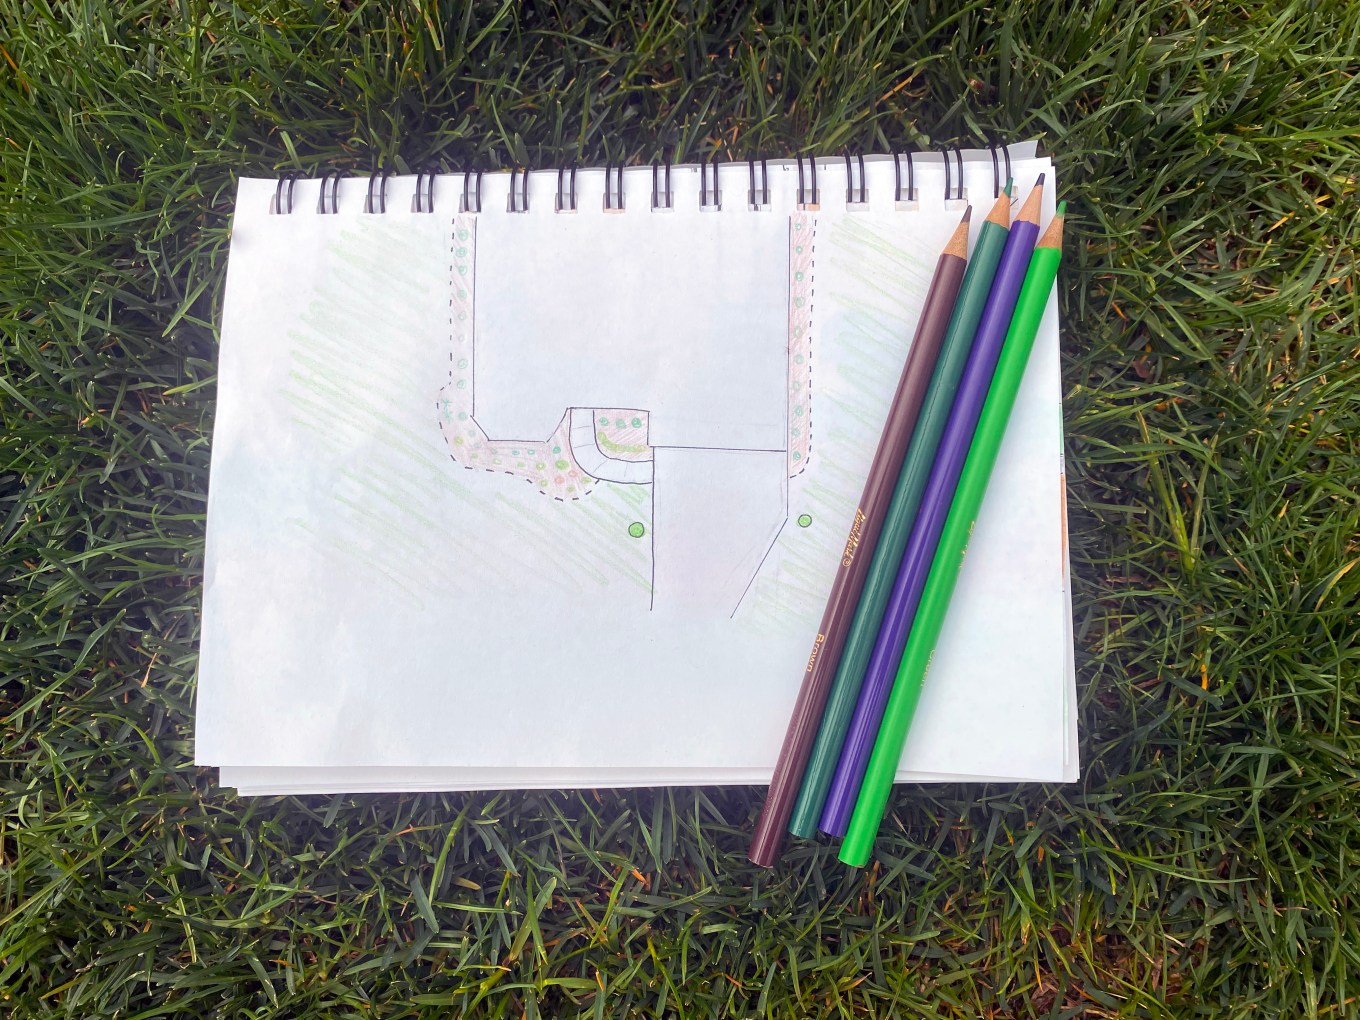 A pencil and pen sketch of a landscape.